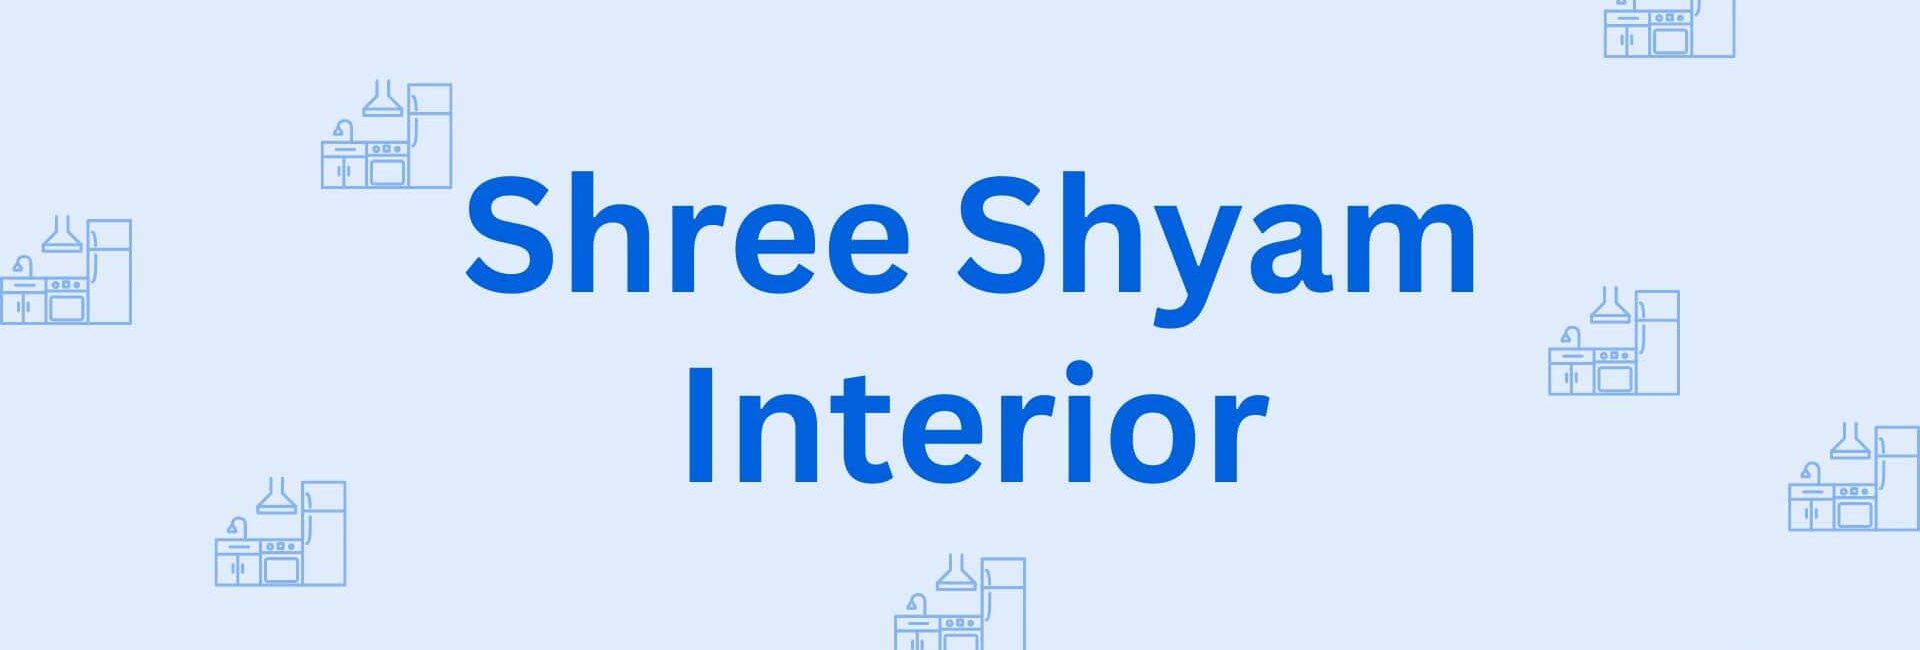 Shree Shyam Interior - Modular Kitchen Dealers In Hisar